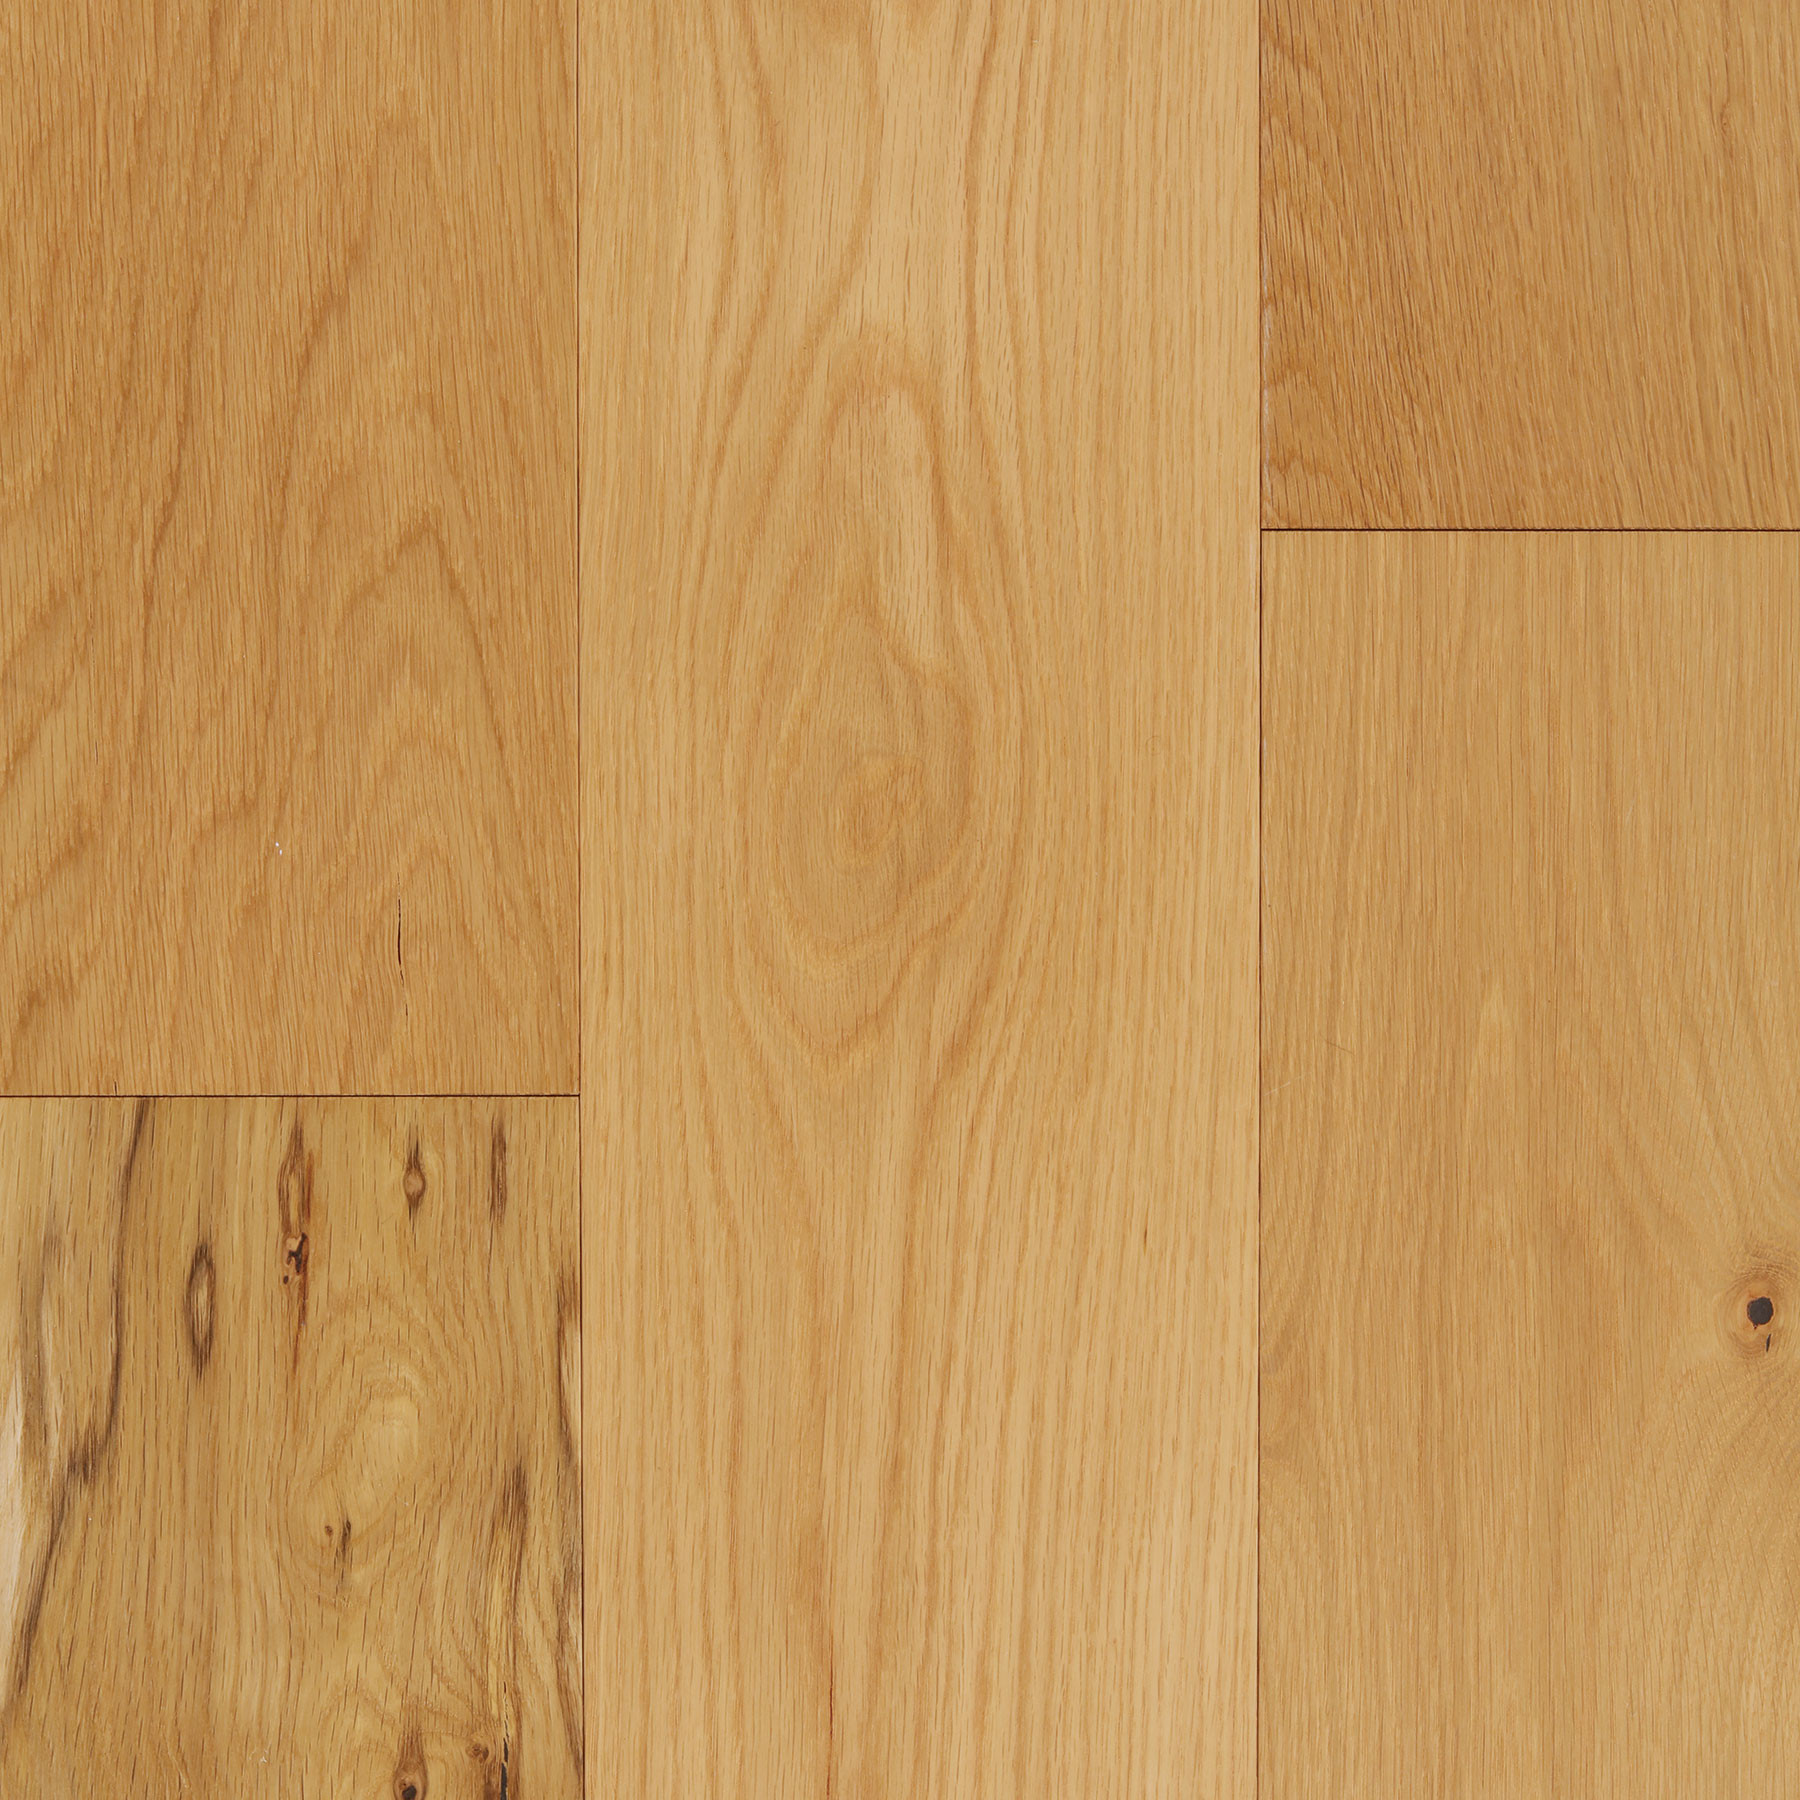 acacia prefinished hardwood flooring of prefinished wood flooring oiled domestic barley etx surfaces pertaining to prefinished wood flooring oiled domestic barley etx surfaces